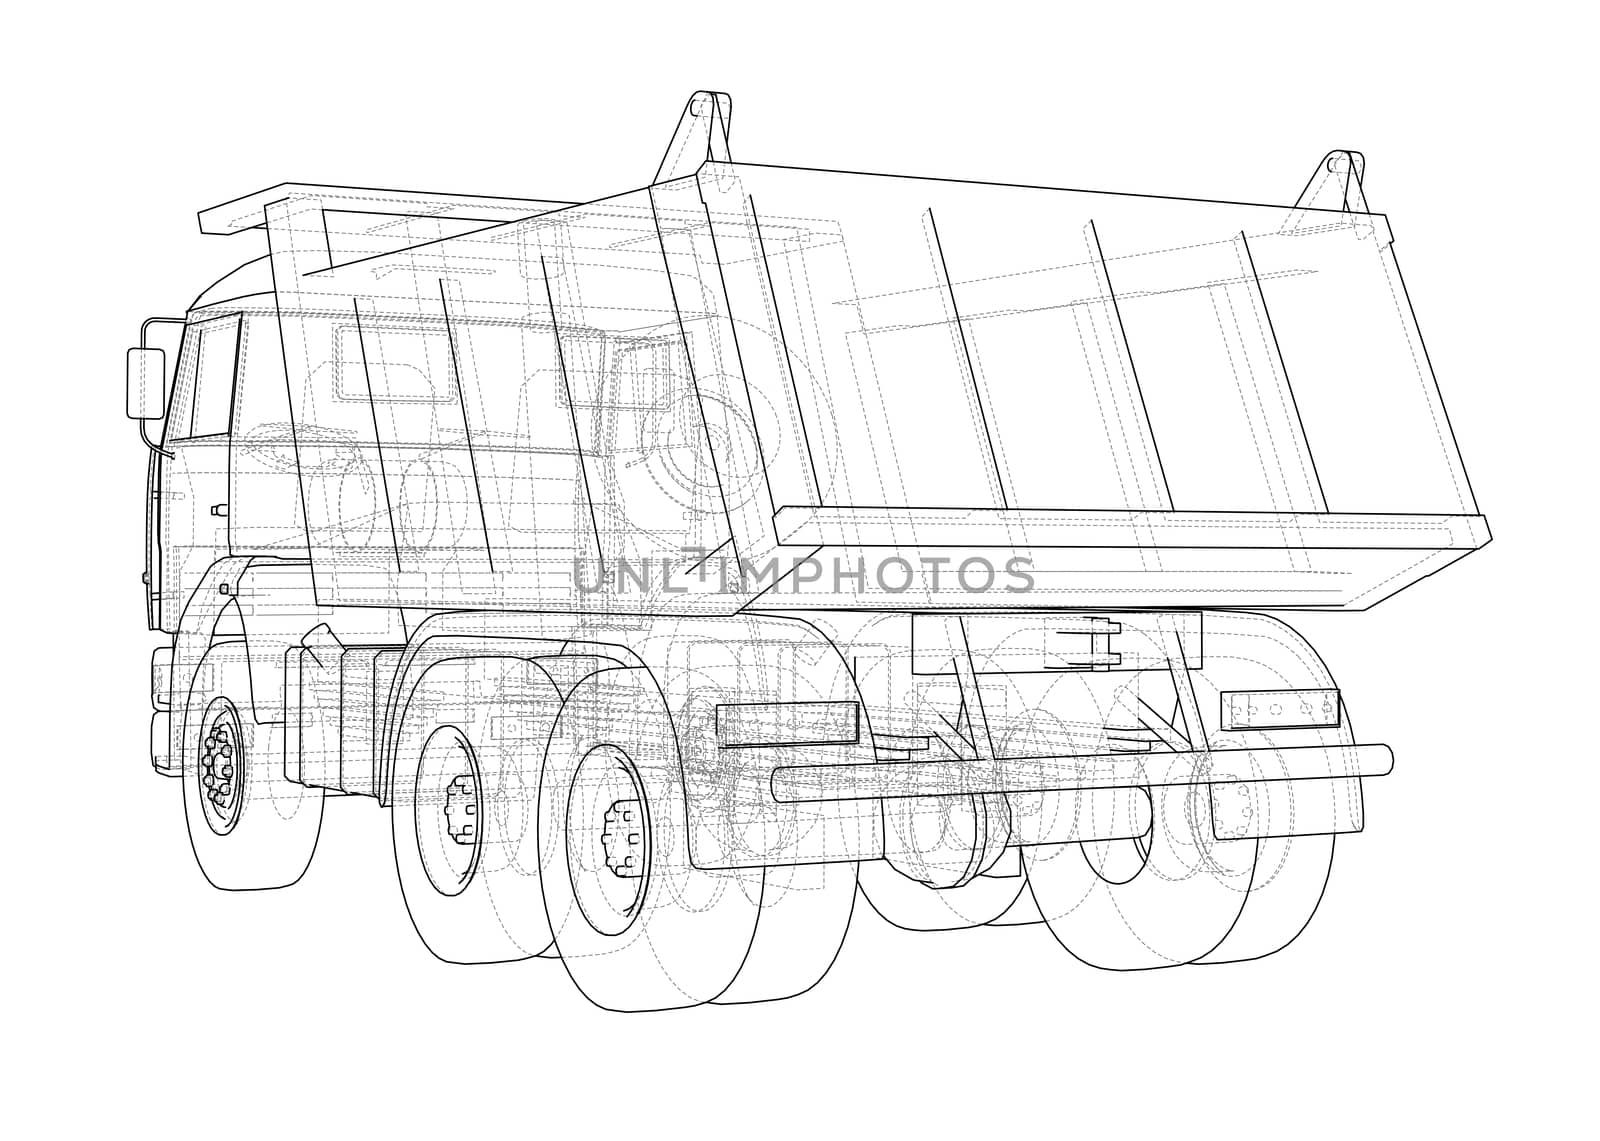 Dump truck. 3d illustration. Wire-frame style. White background